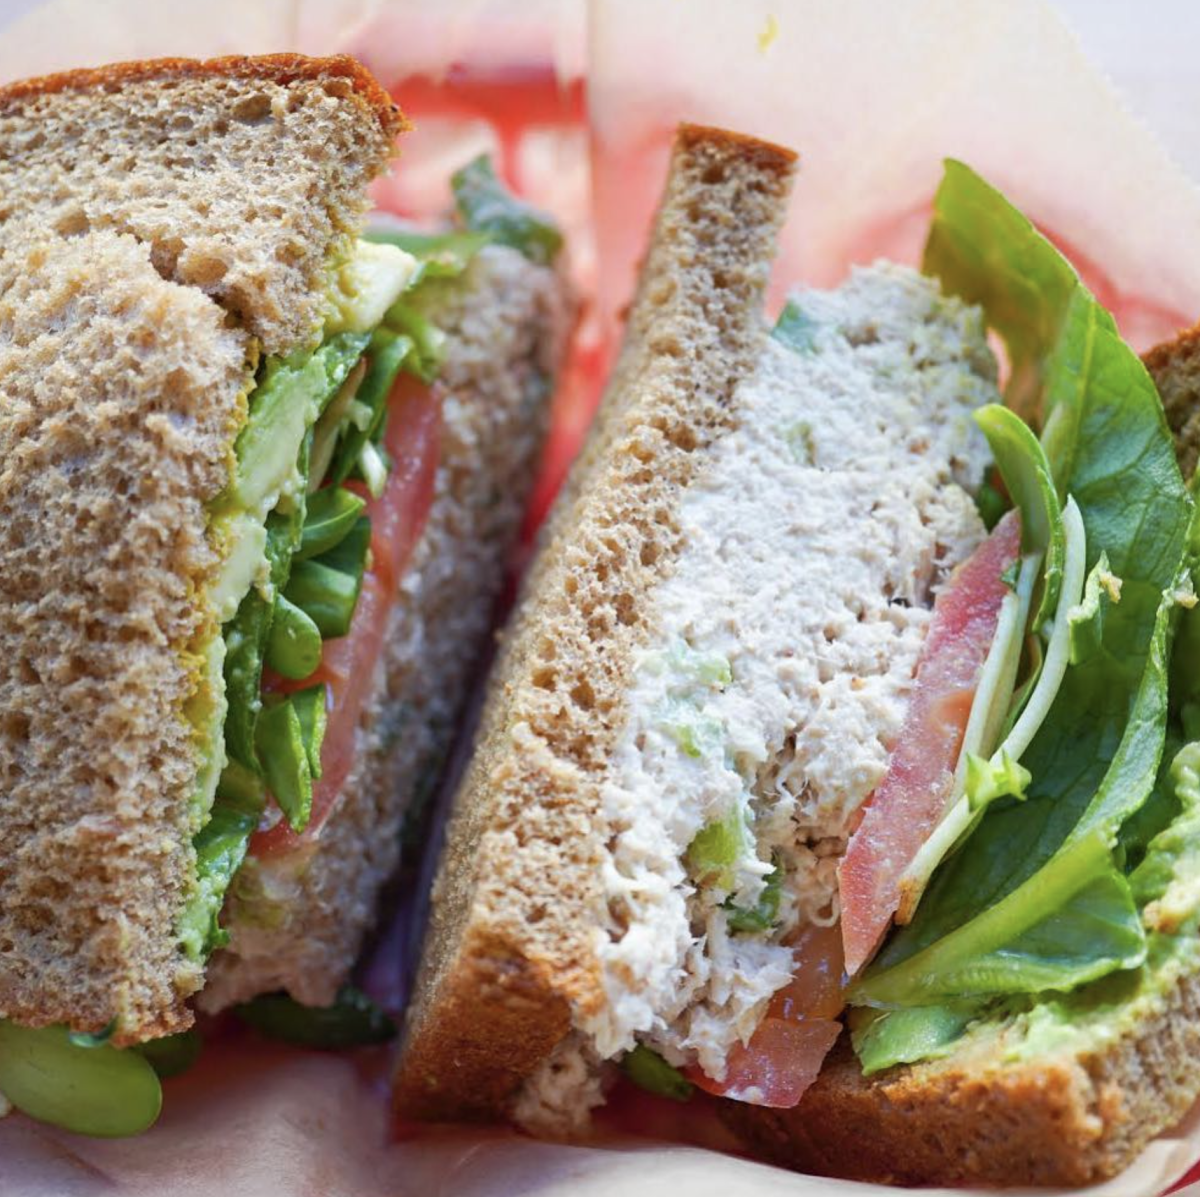 Esther’s tuna sandwich